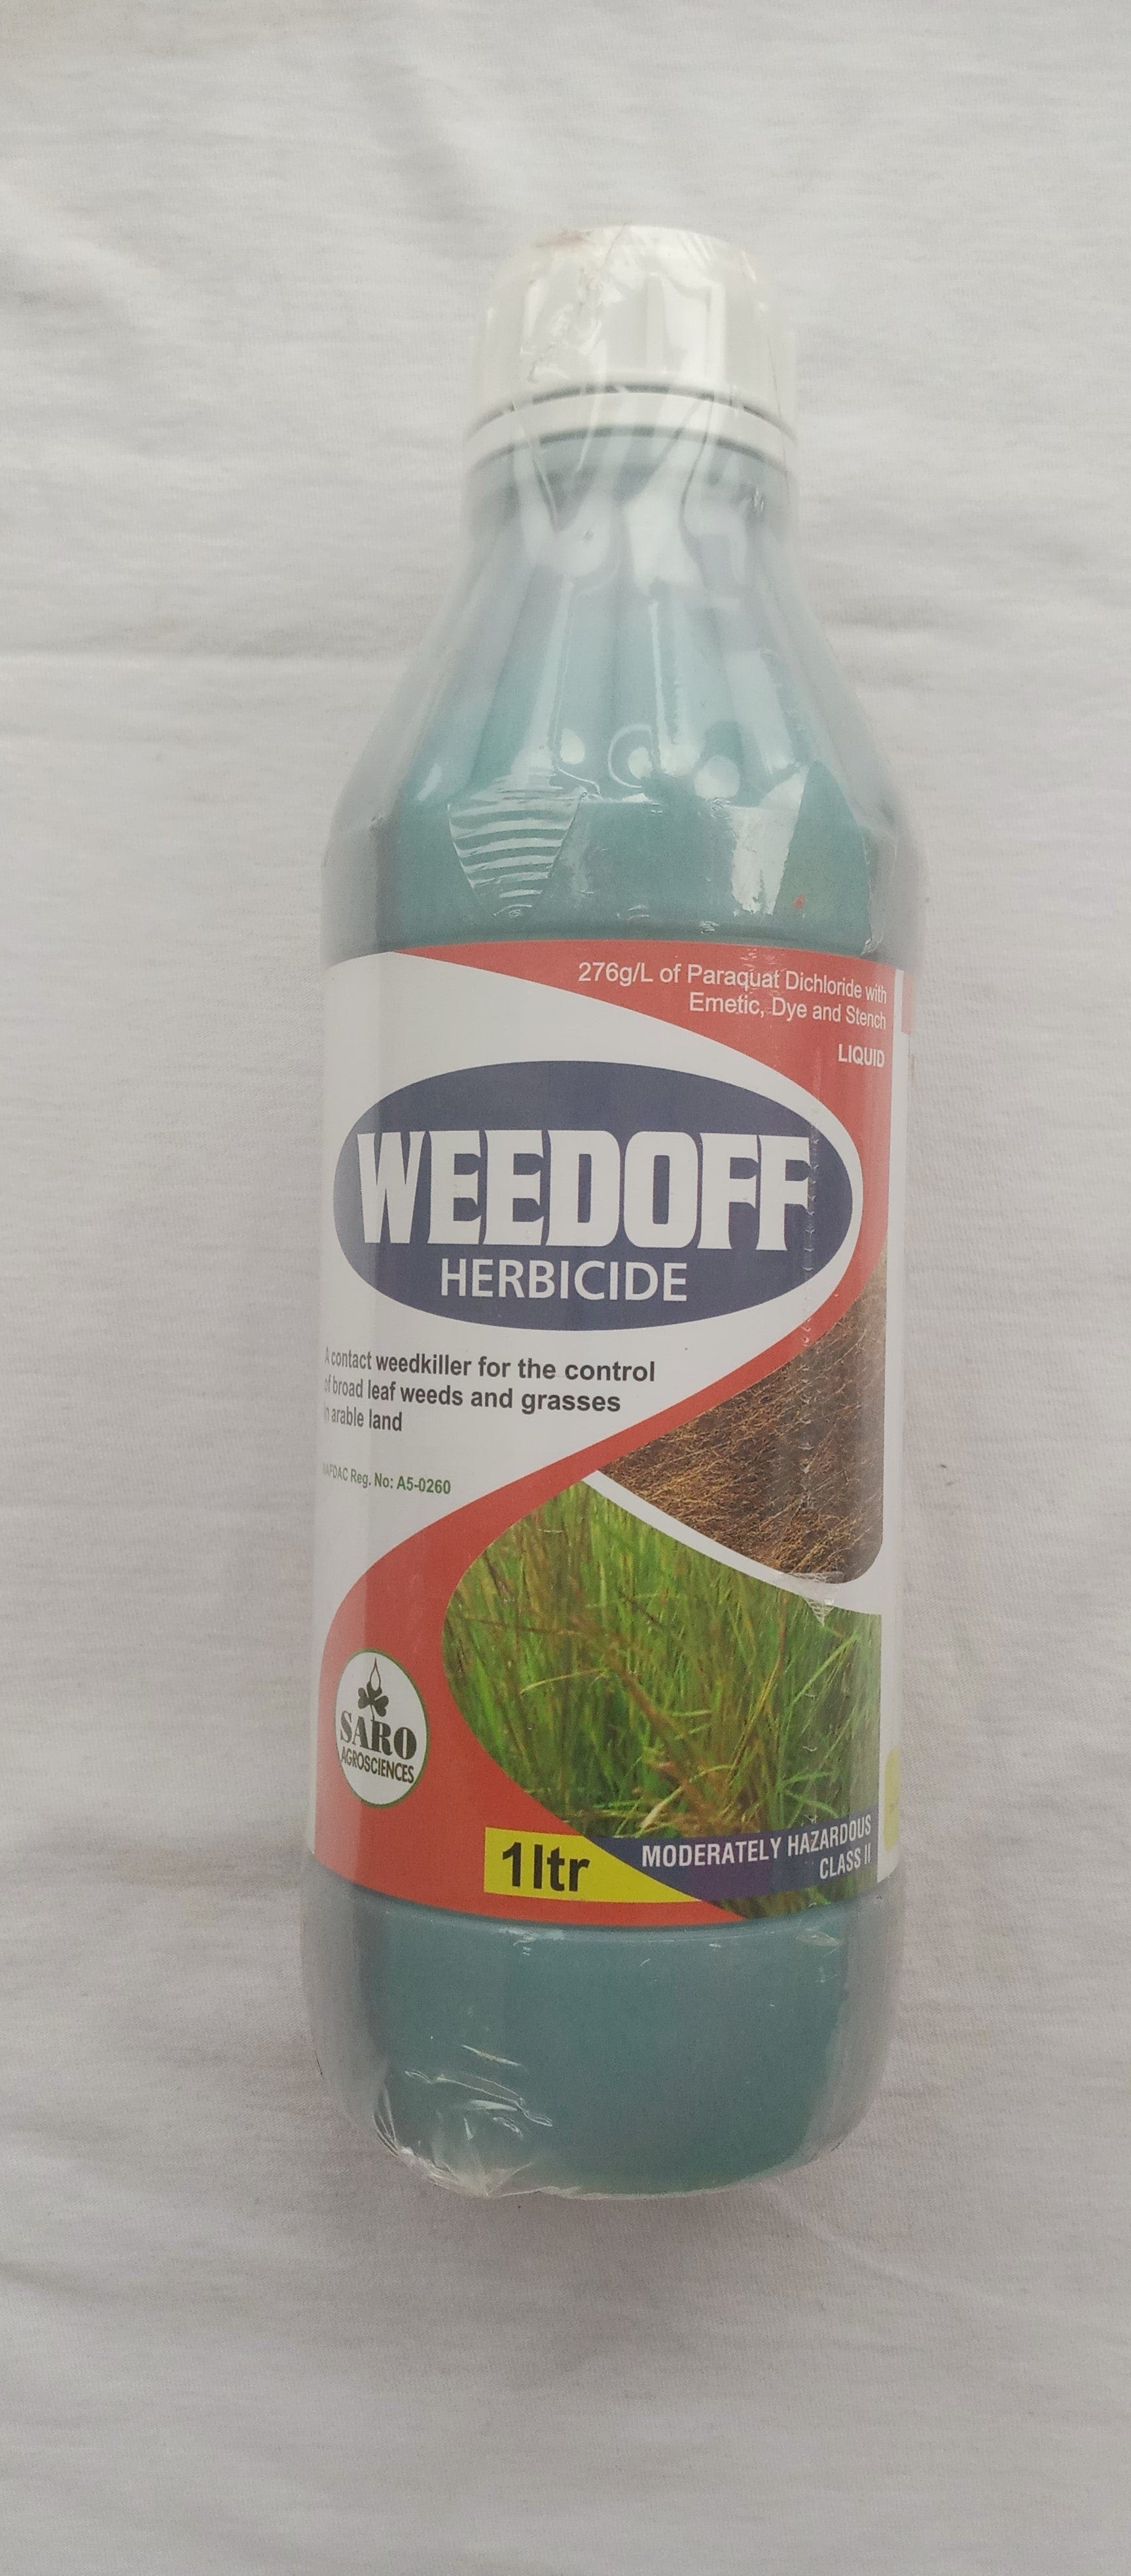 Paraquat Herbicides Agro-toolz Weedoff